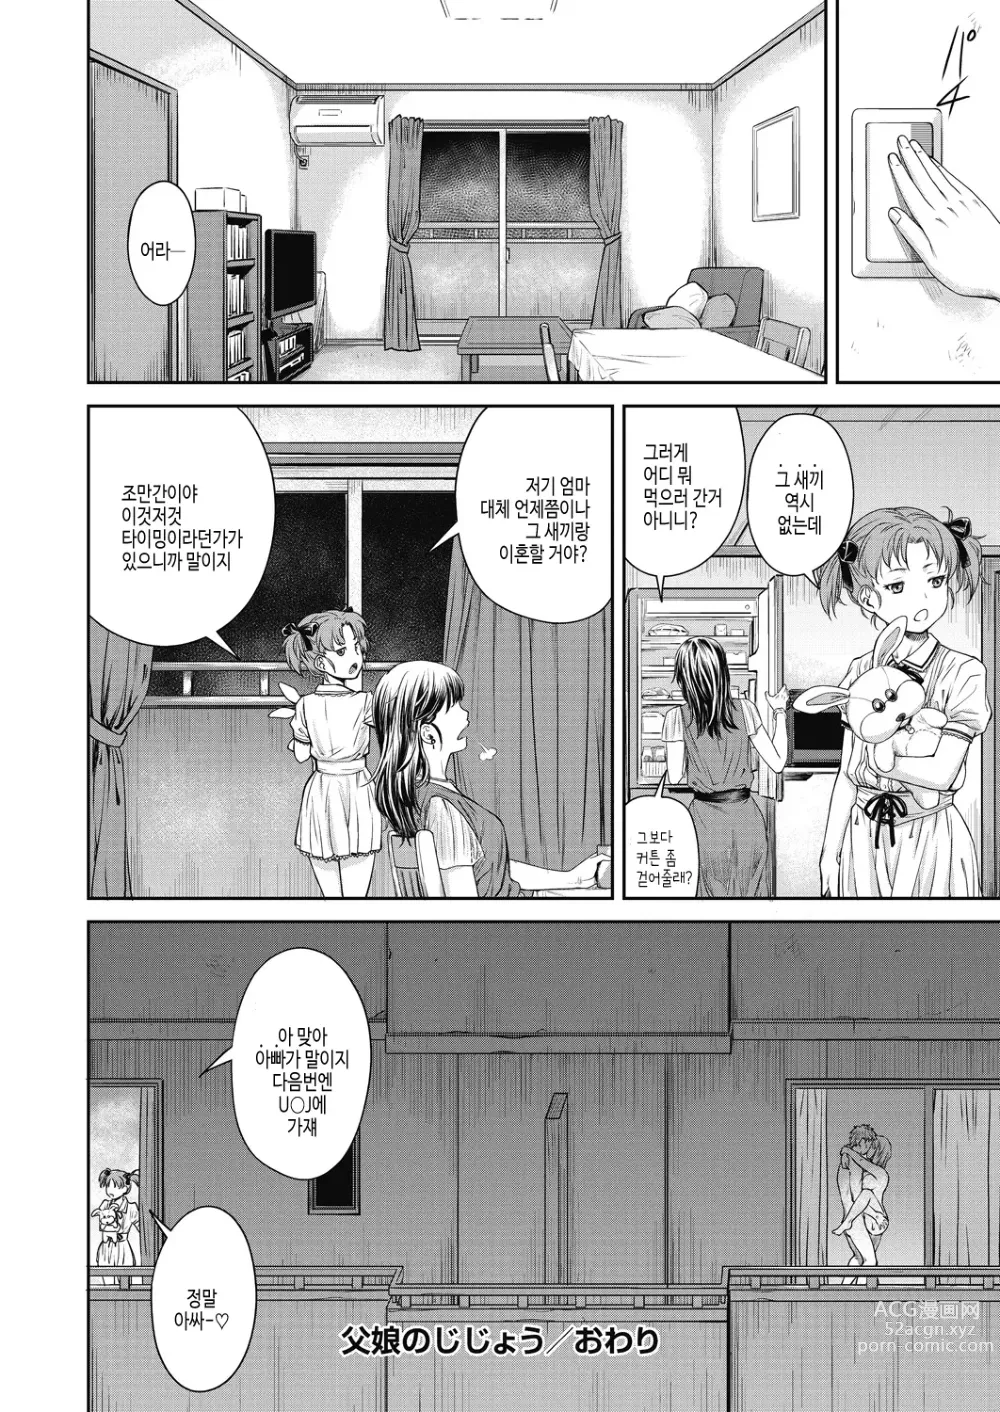 Page 190 of manga Kaname Date Chuu